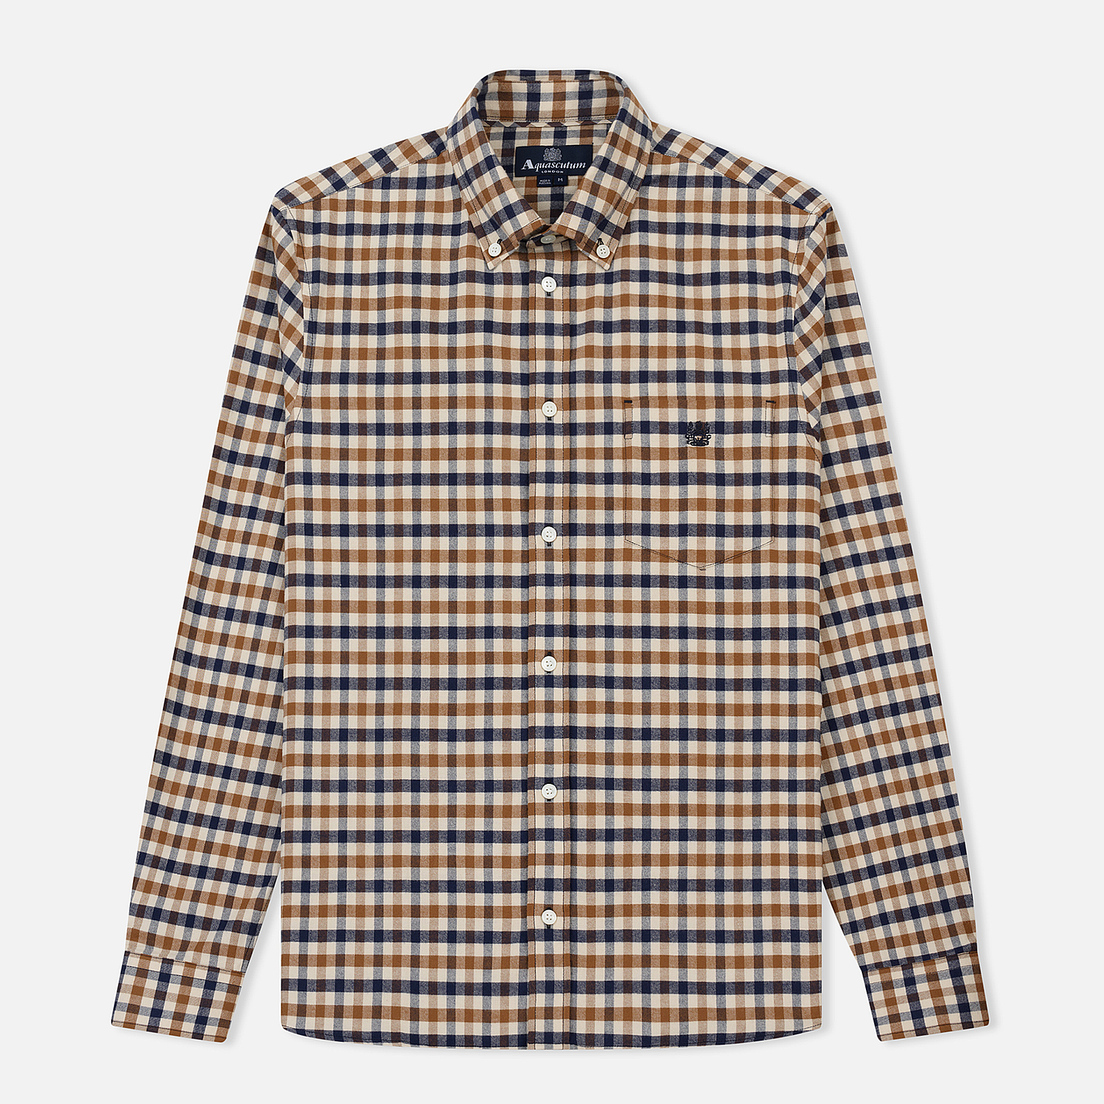 Aquascutum Мужская рубашка Goodman Small Flannel Club Check LS